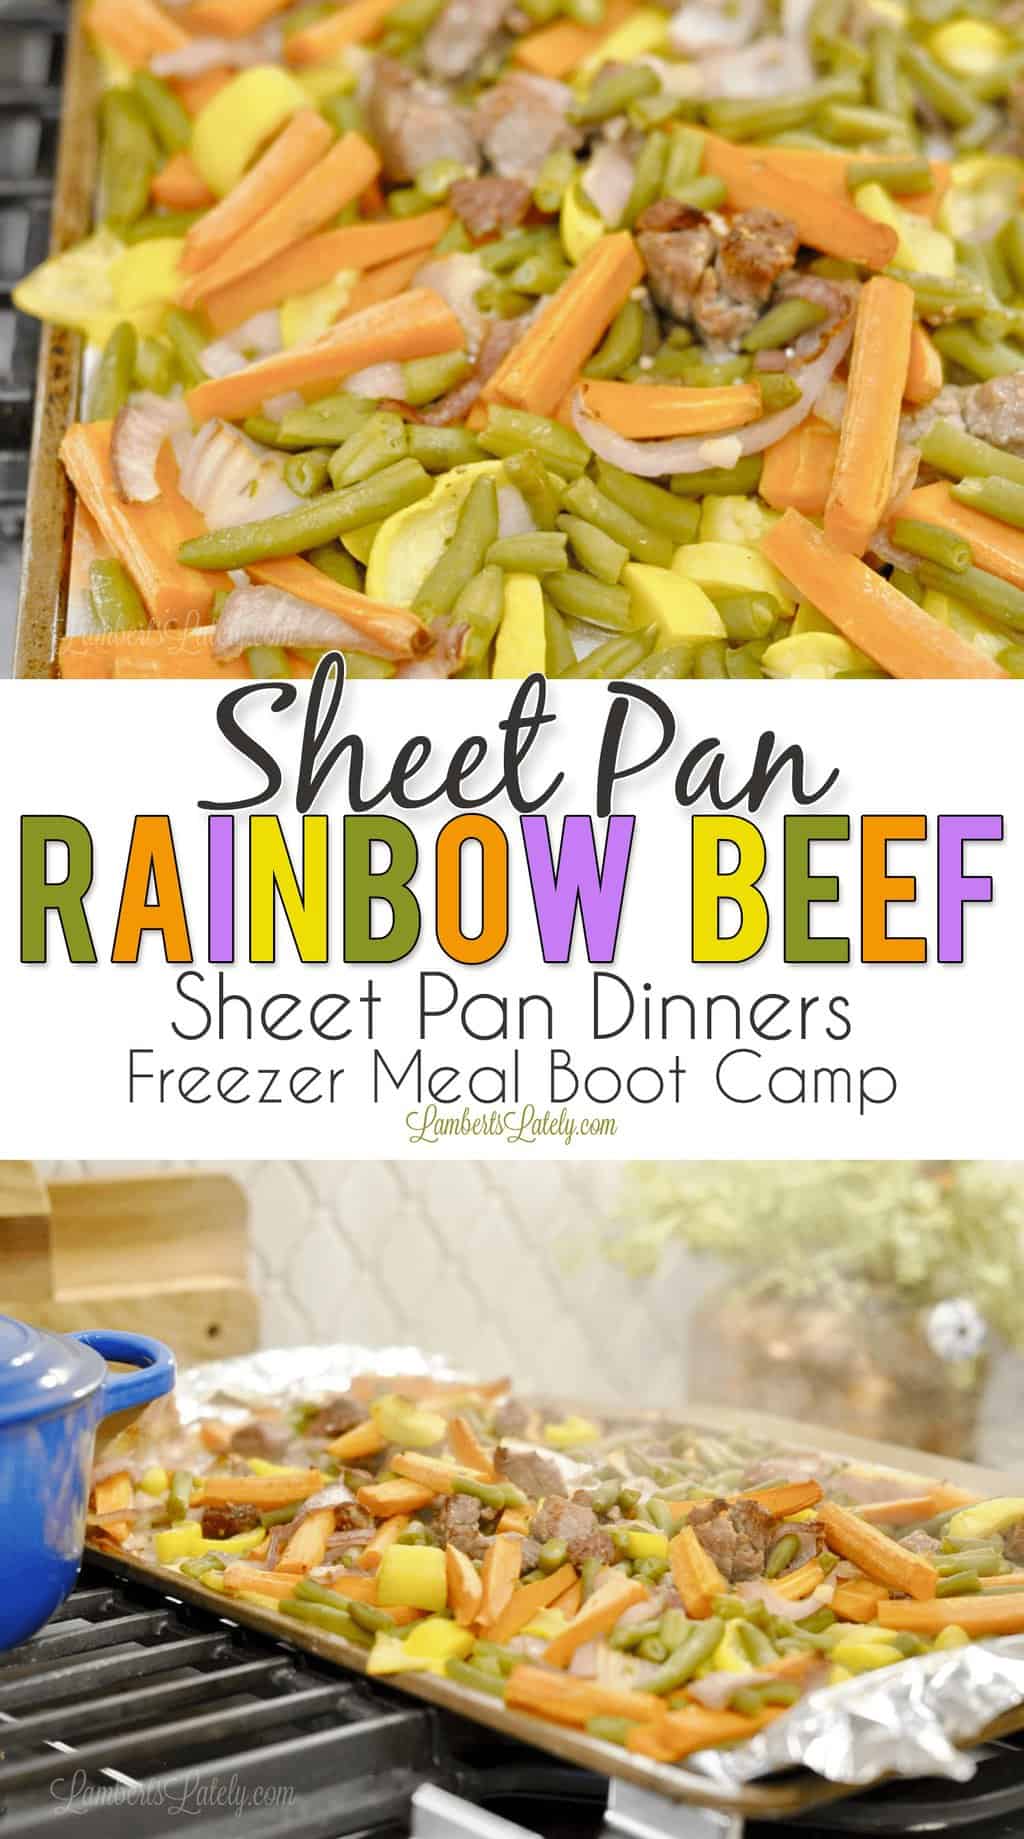 Sheet Pan Rainbow Beef sheet pan dinners freezer meal boot camp.